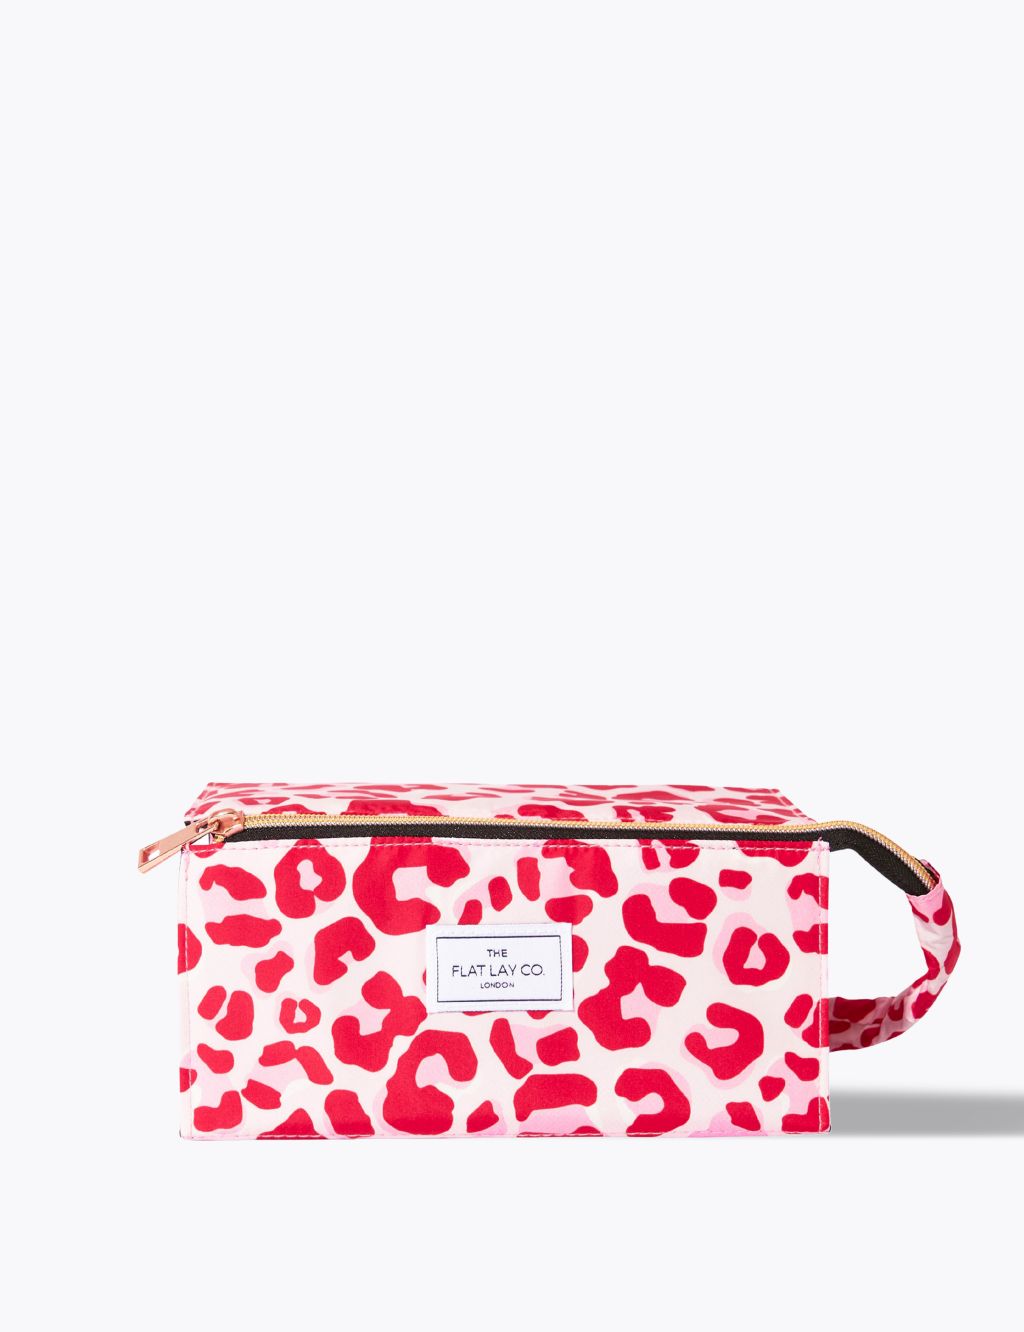 Makeup Box Bag In Pink Leopard